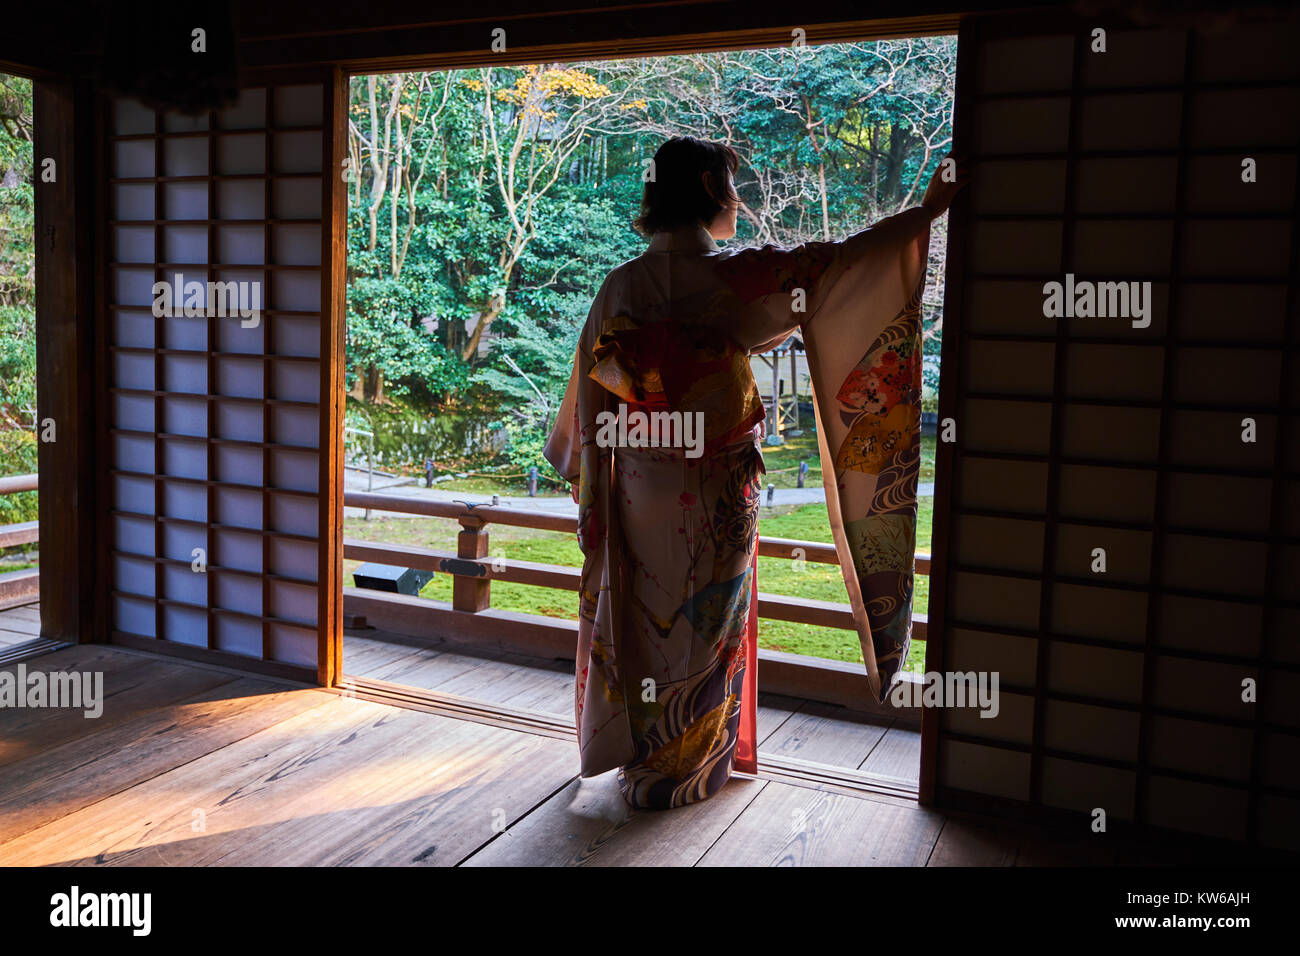 Japan, Honshu island, Kansai region, Kyoto, Gion, Geisha former area, young woman in kimono Stock Photo